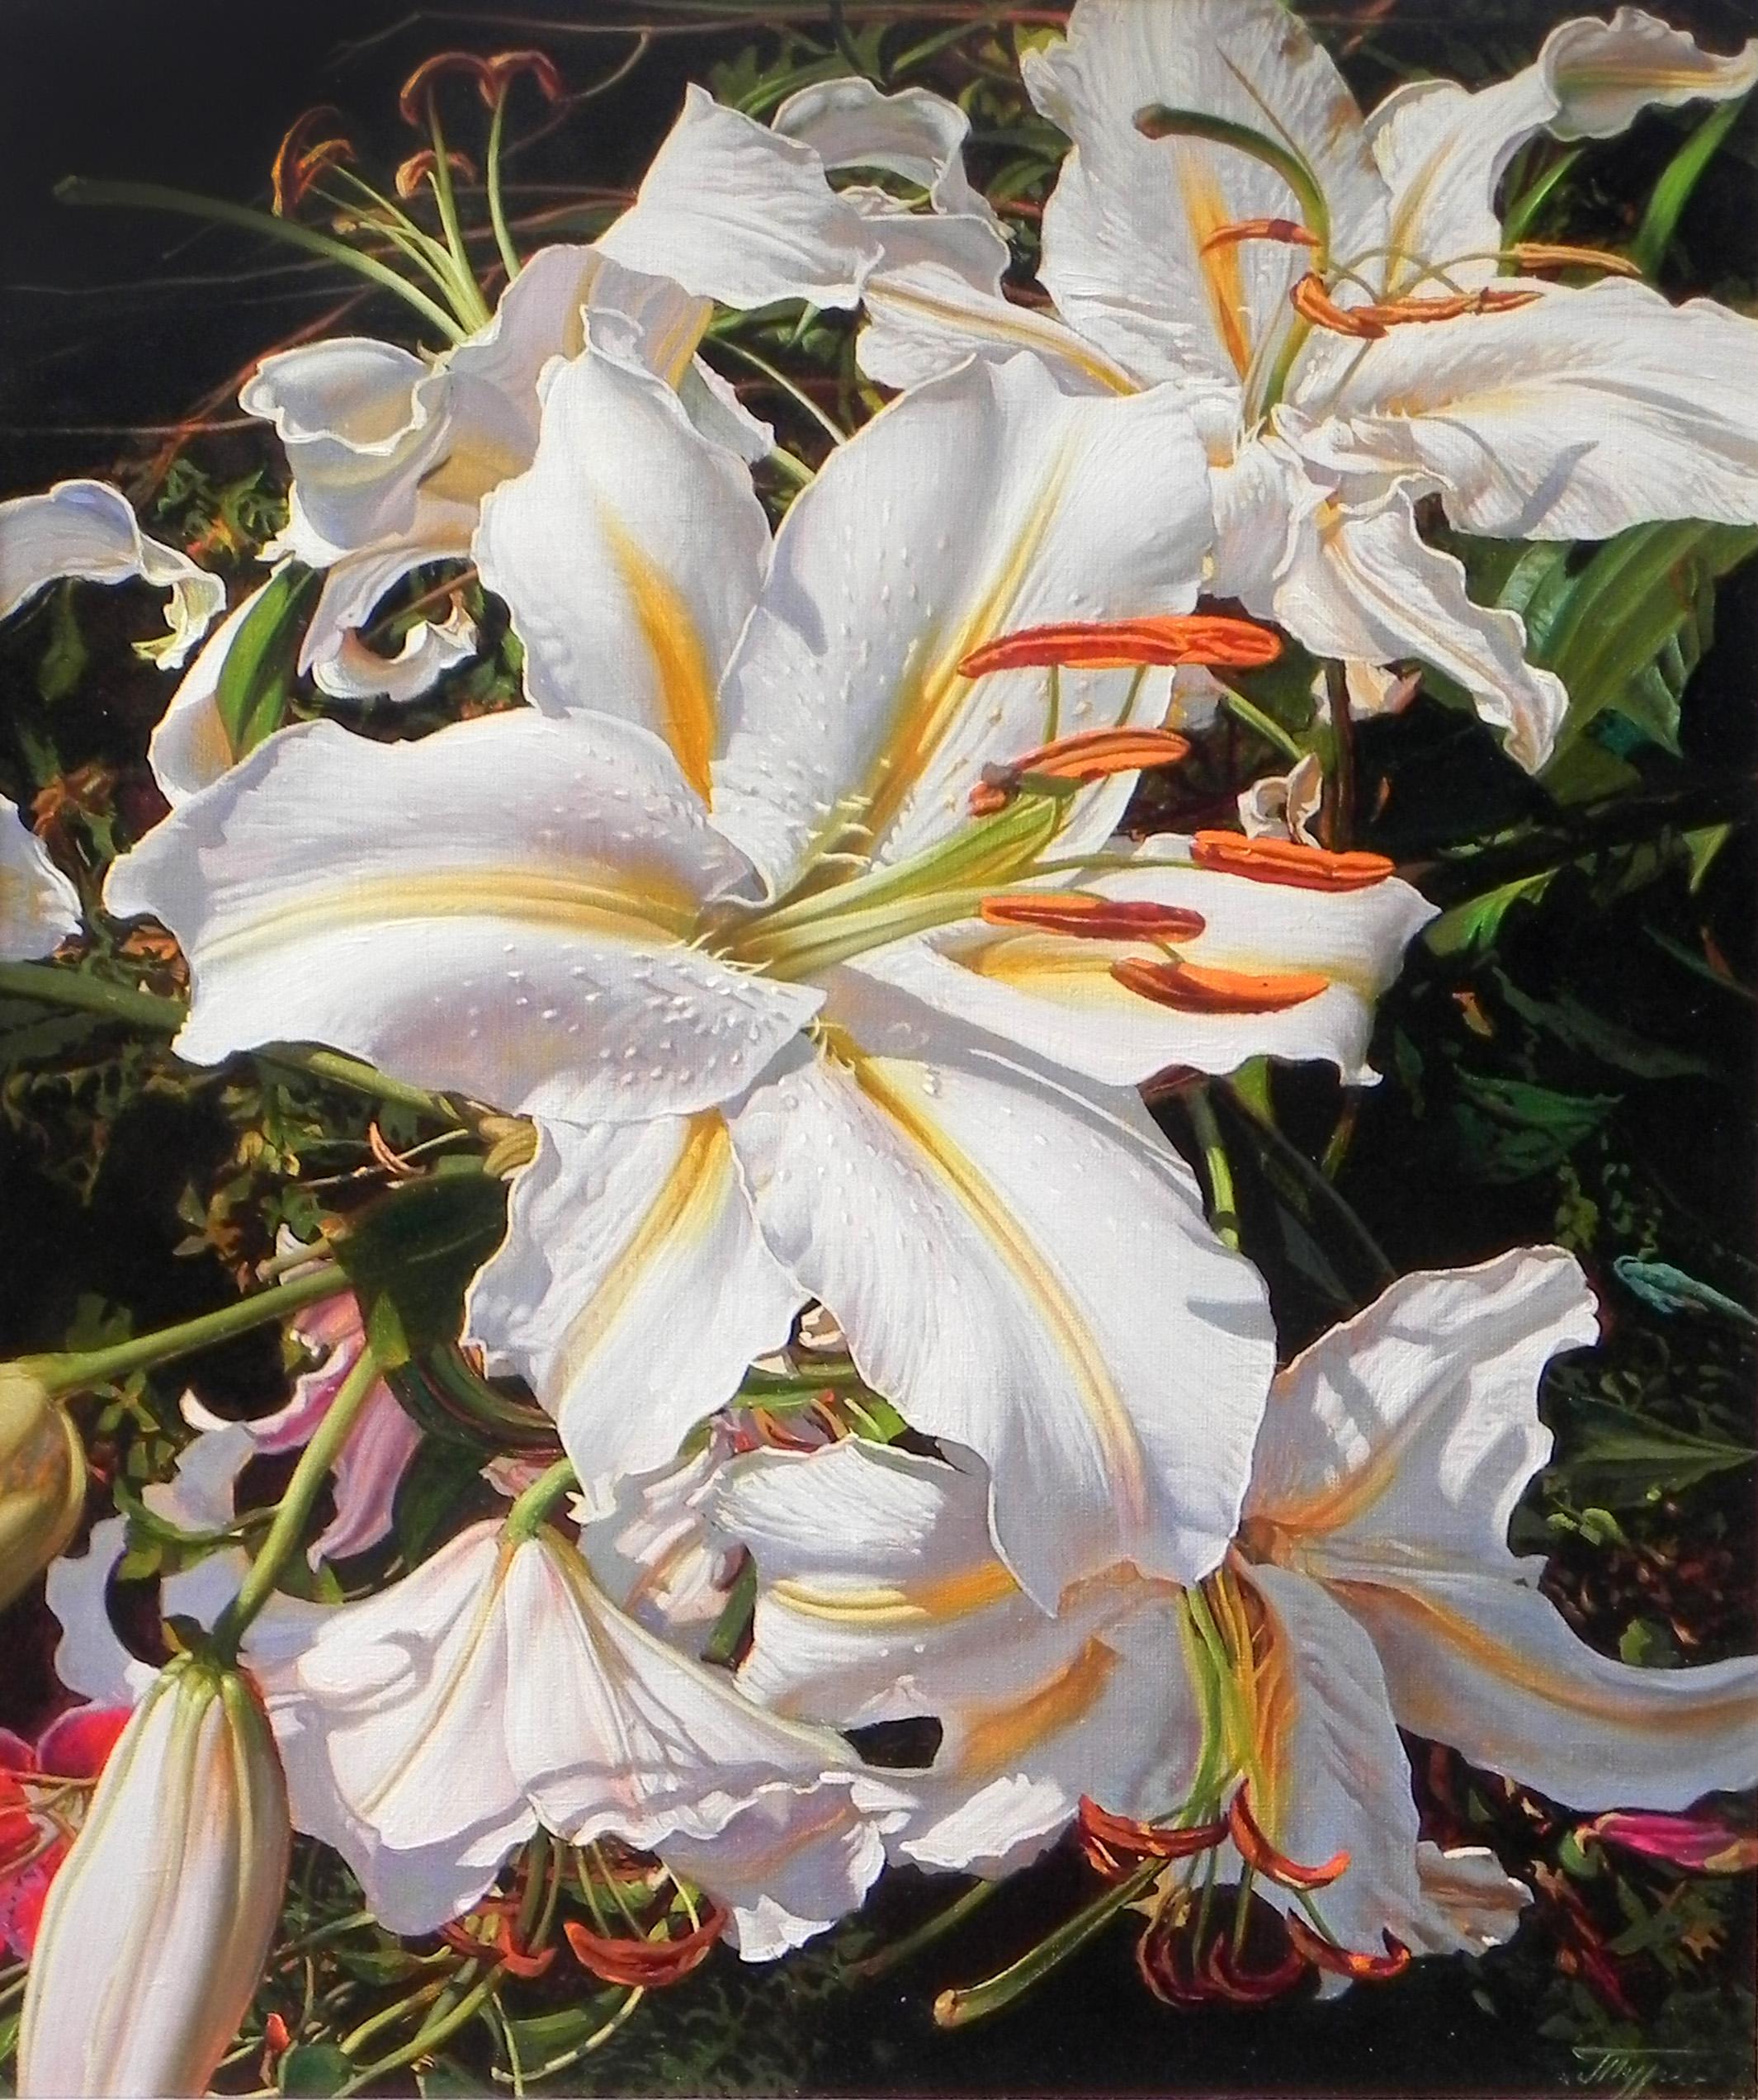 "White Lilies", Oleg Turchin, Oil on Canvas, 30" x 24", Photorealism Painting